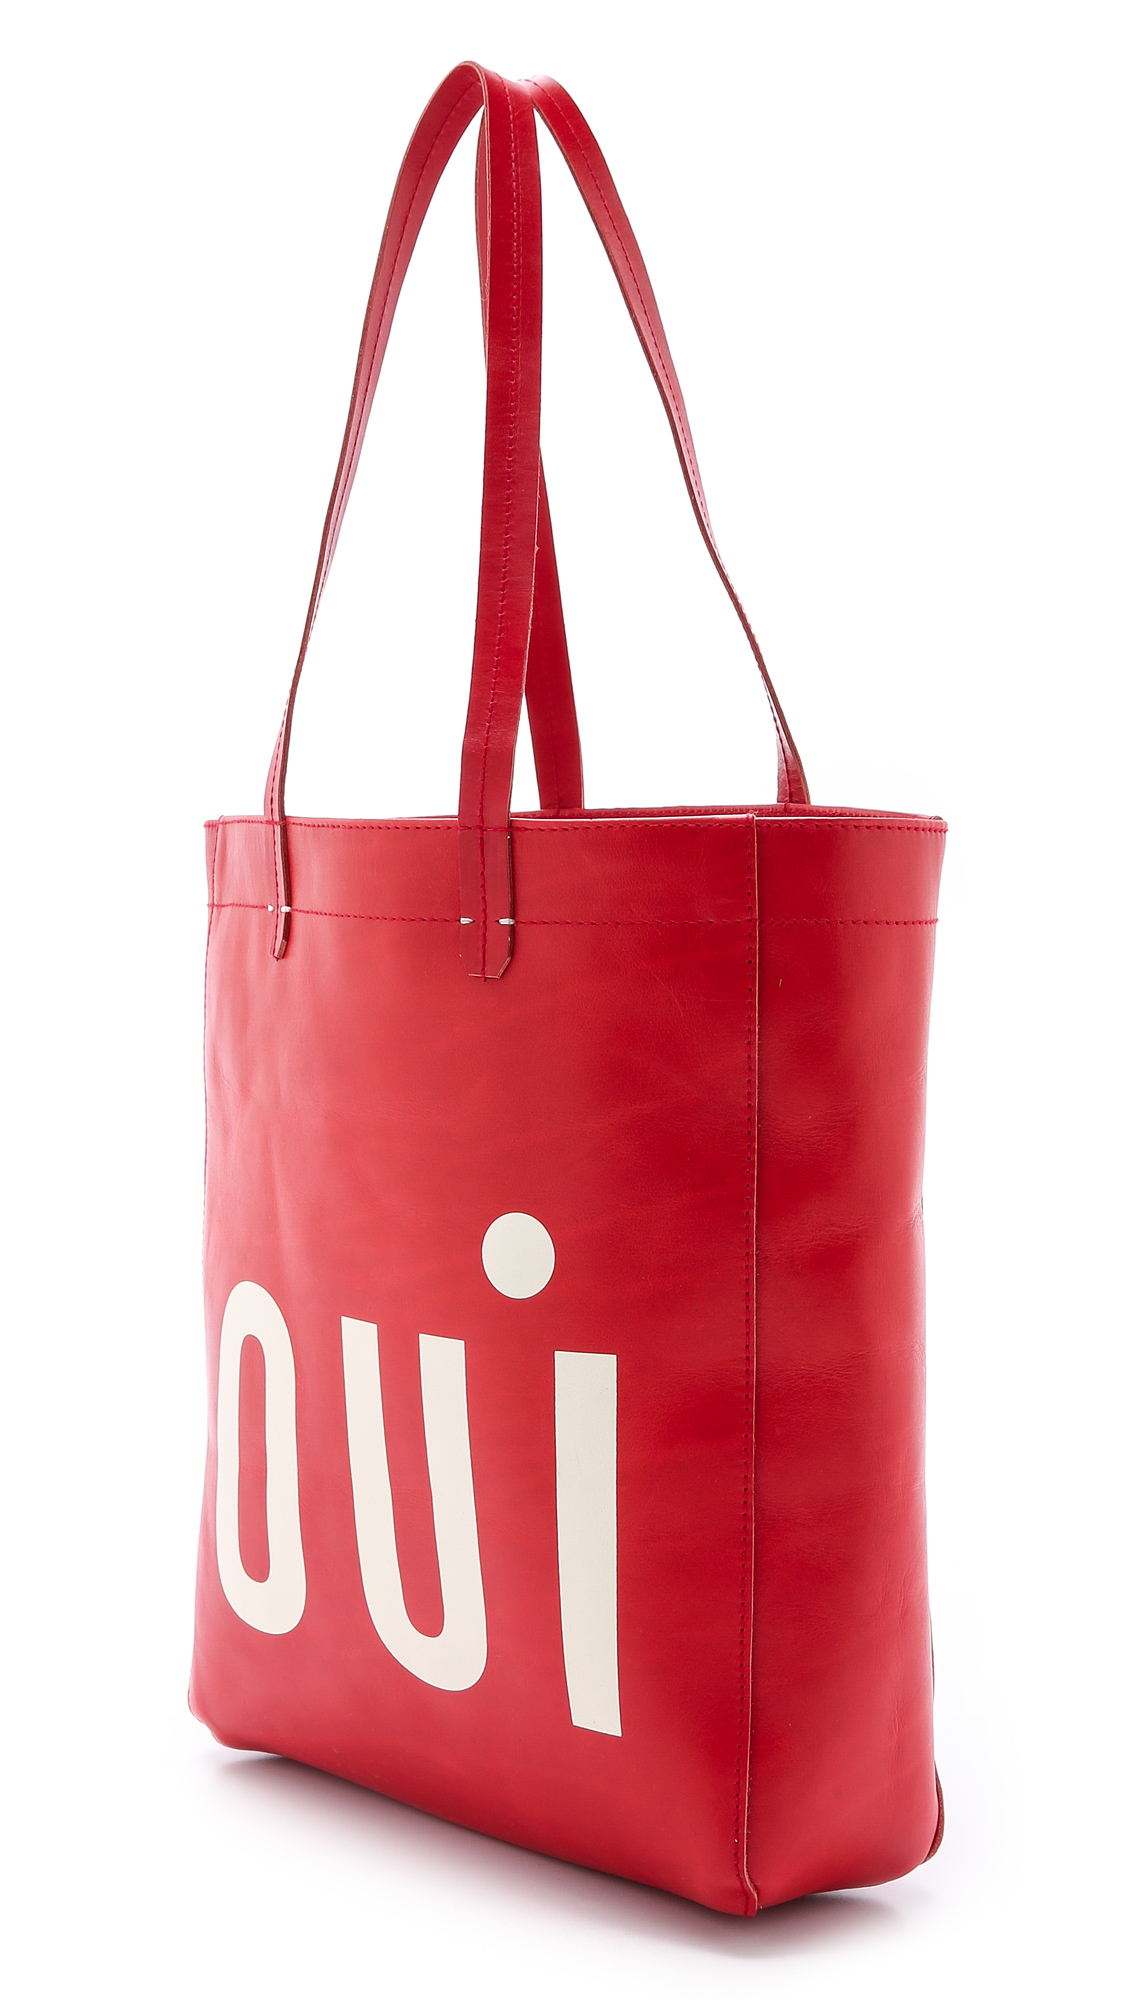 Clare V. Sandy Tote Bag - Red Totes, Handbags - W2429072